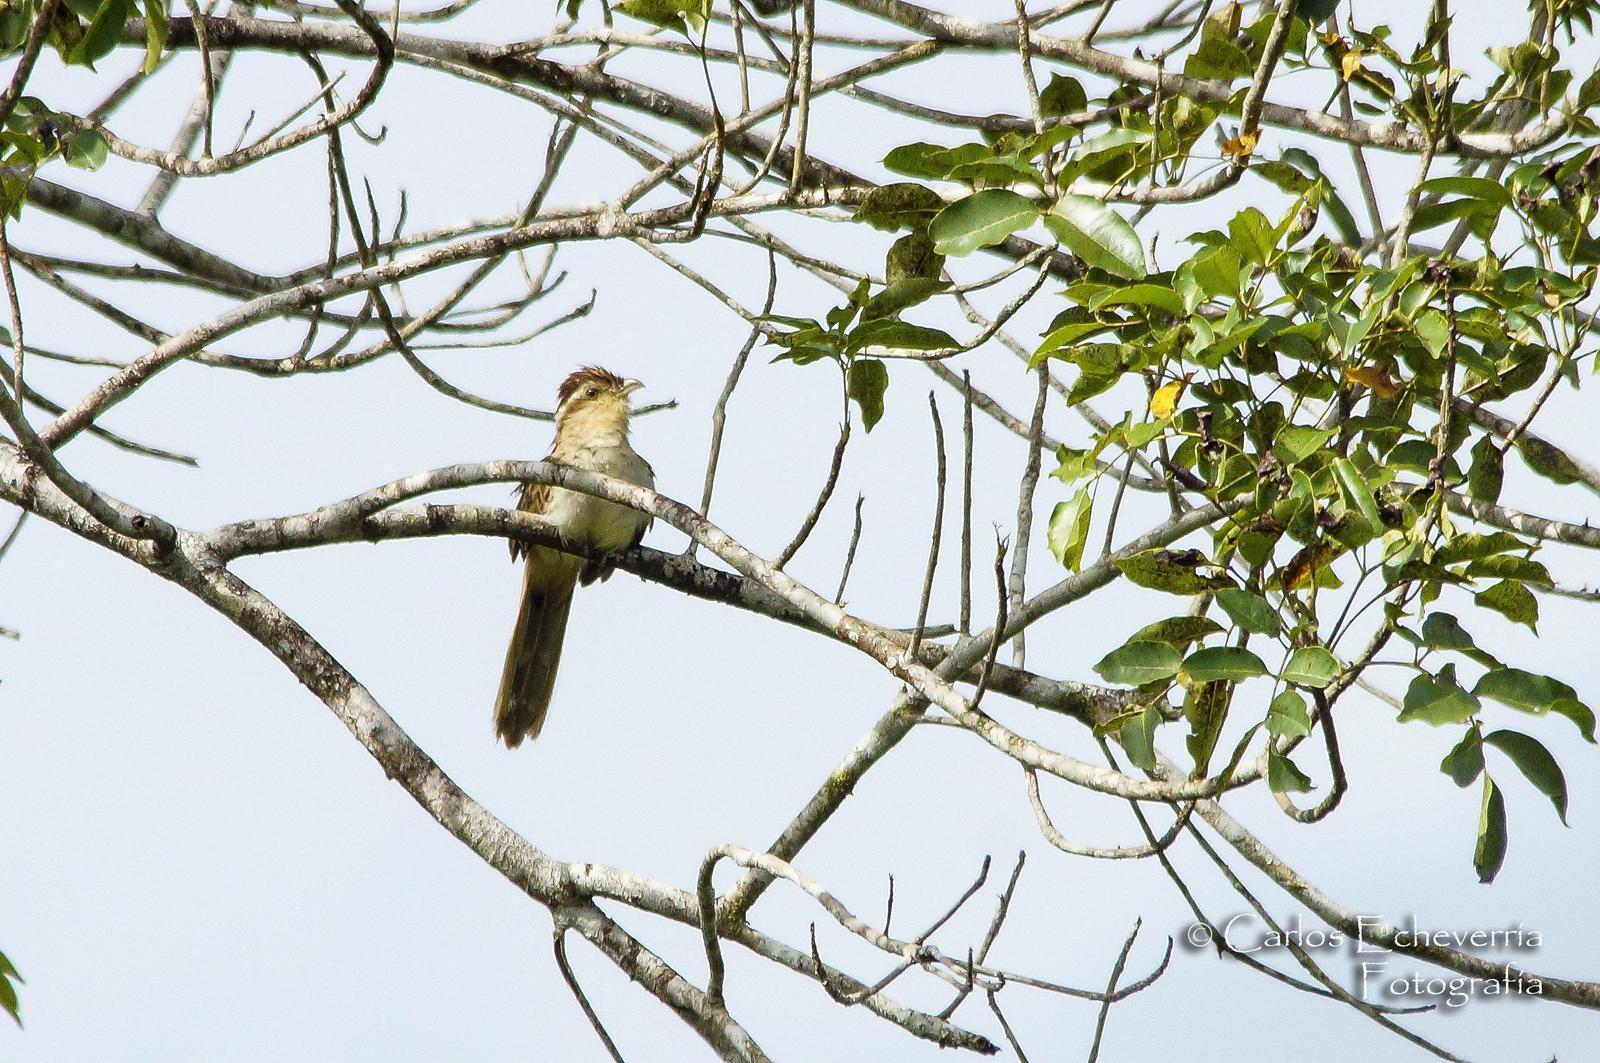 Striped Cuckoo Photo by Carlos Echeverría